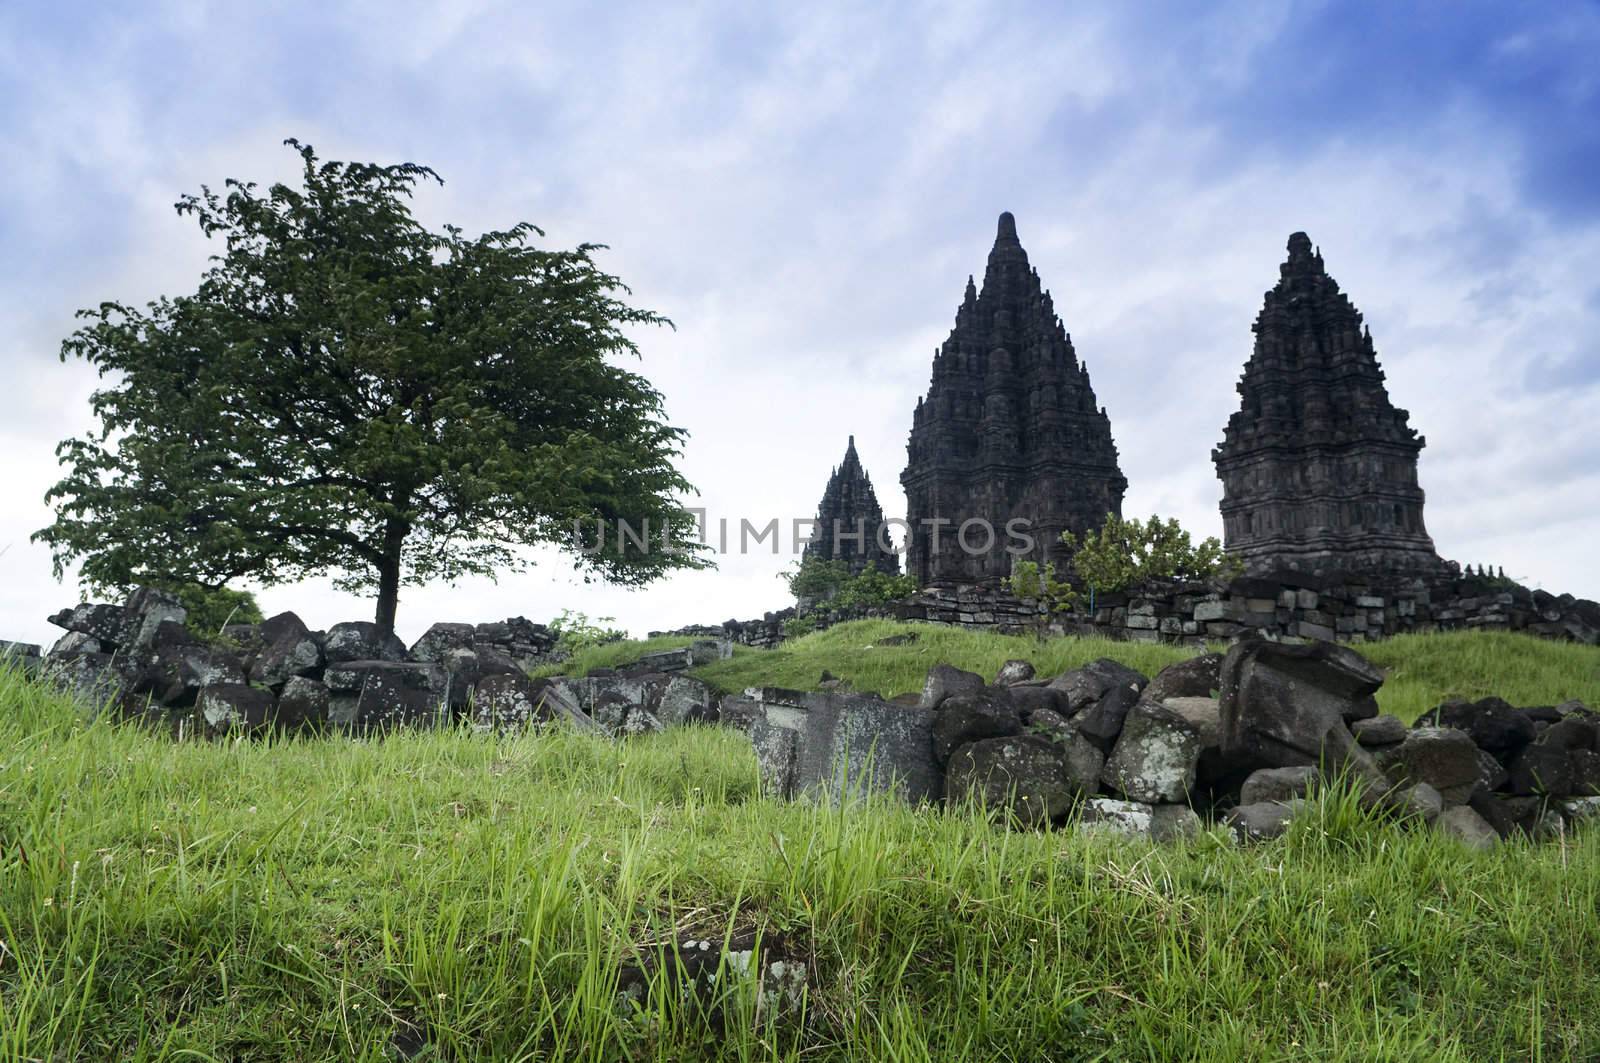 Prambanan ruins by szefei